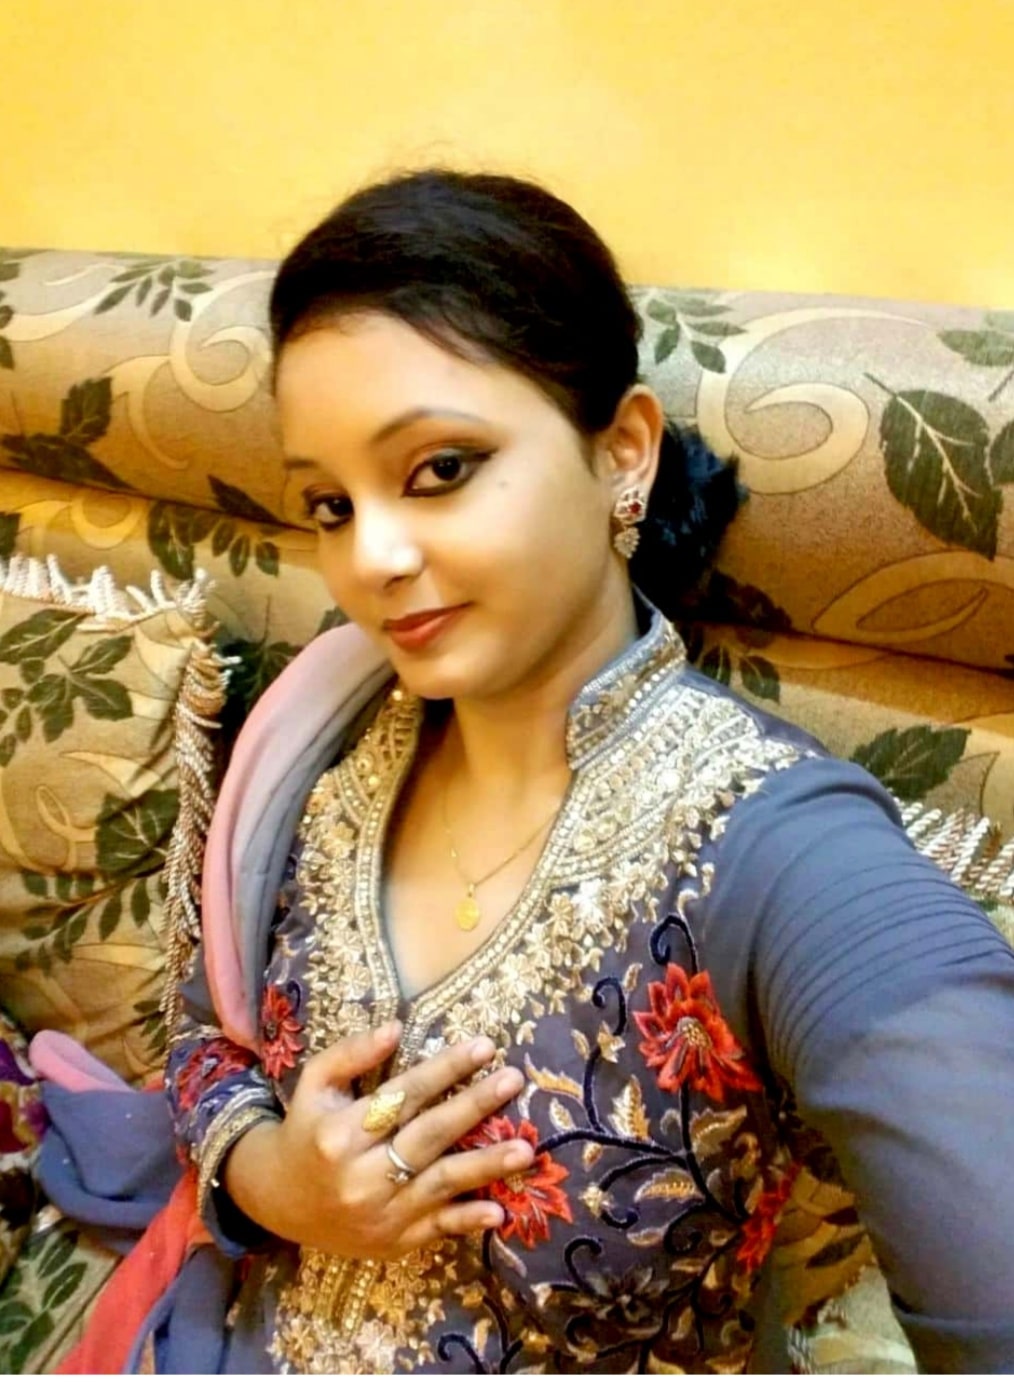 Beautiful Indian girl taking selfie